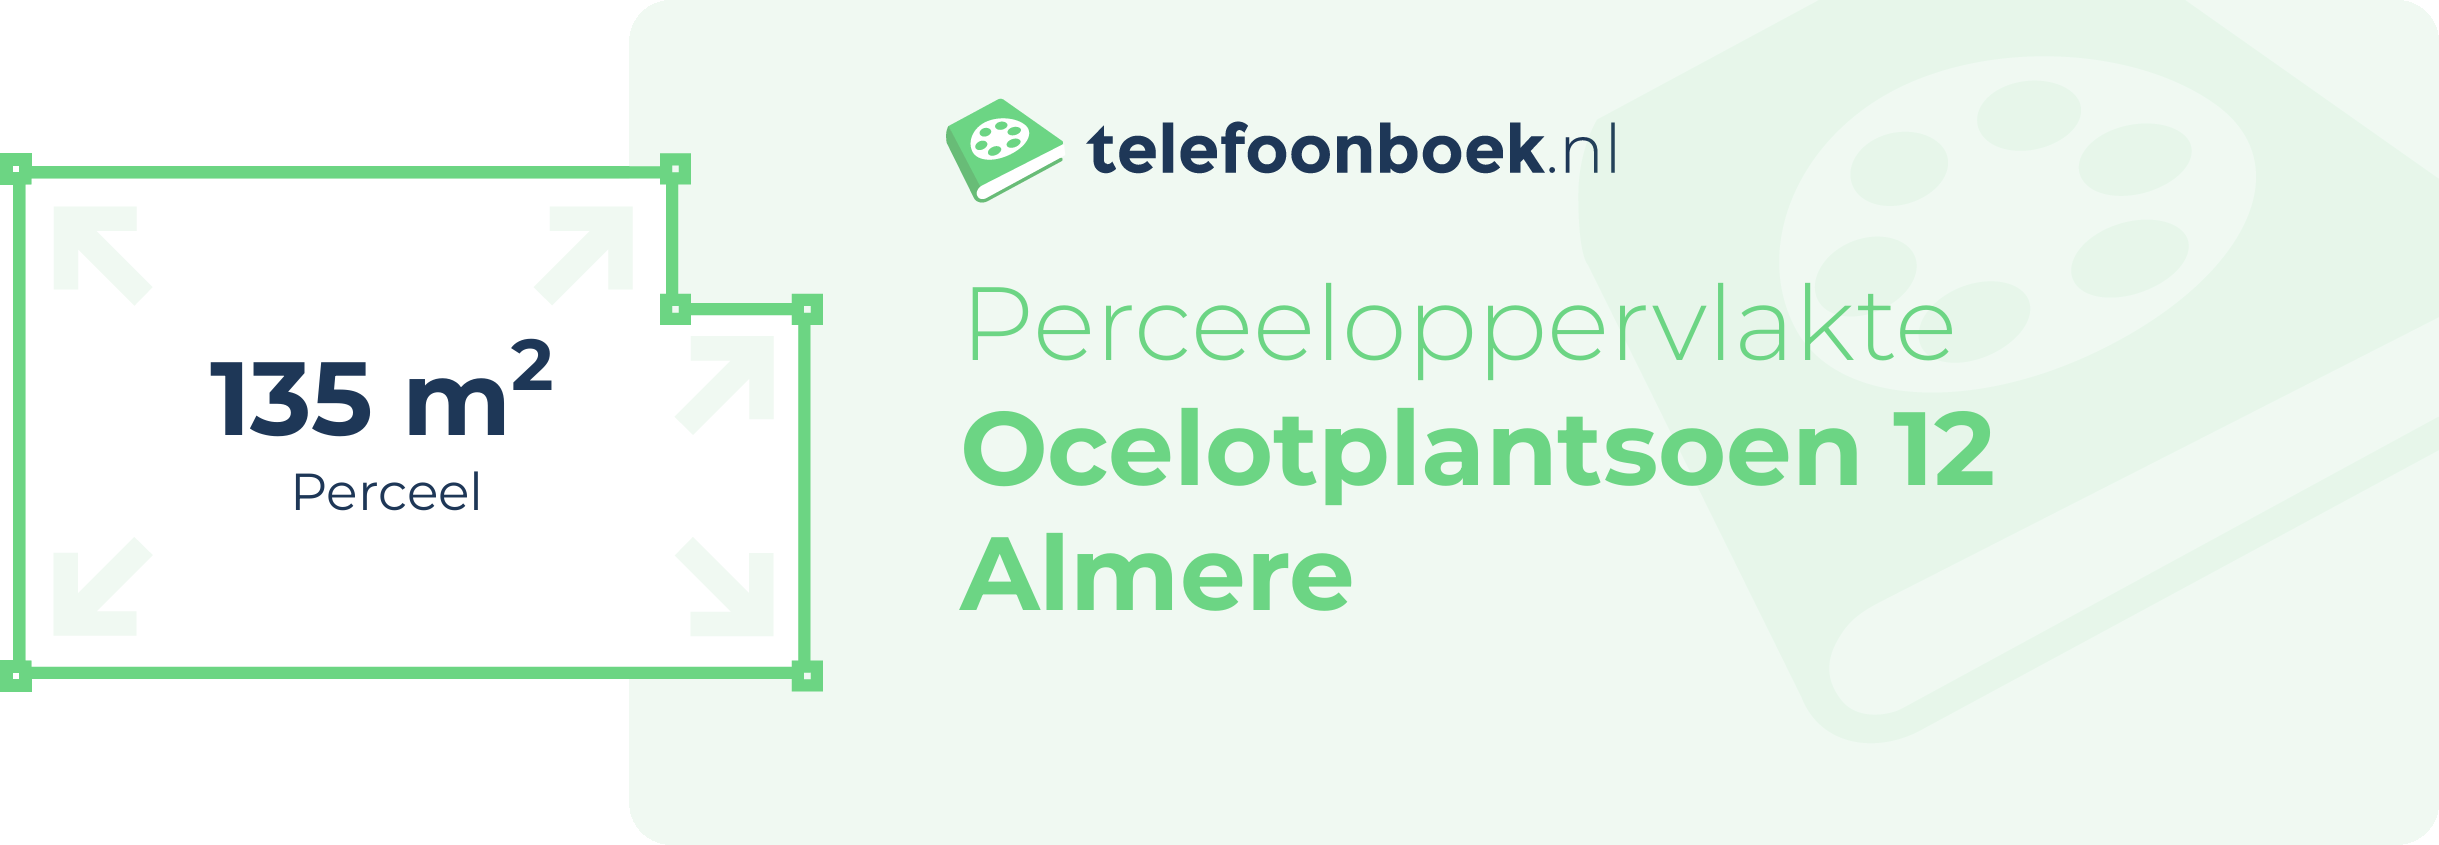 Perceeloppervlakte Ocelotplantsoen 12 Almere